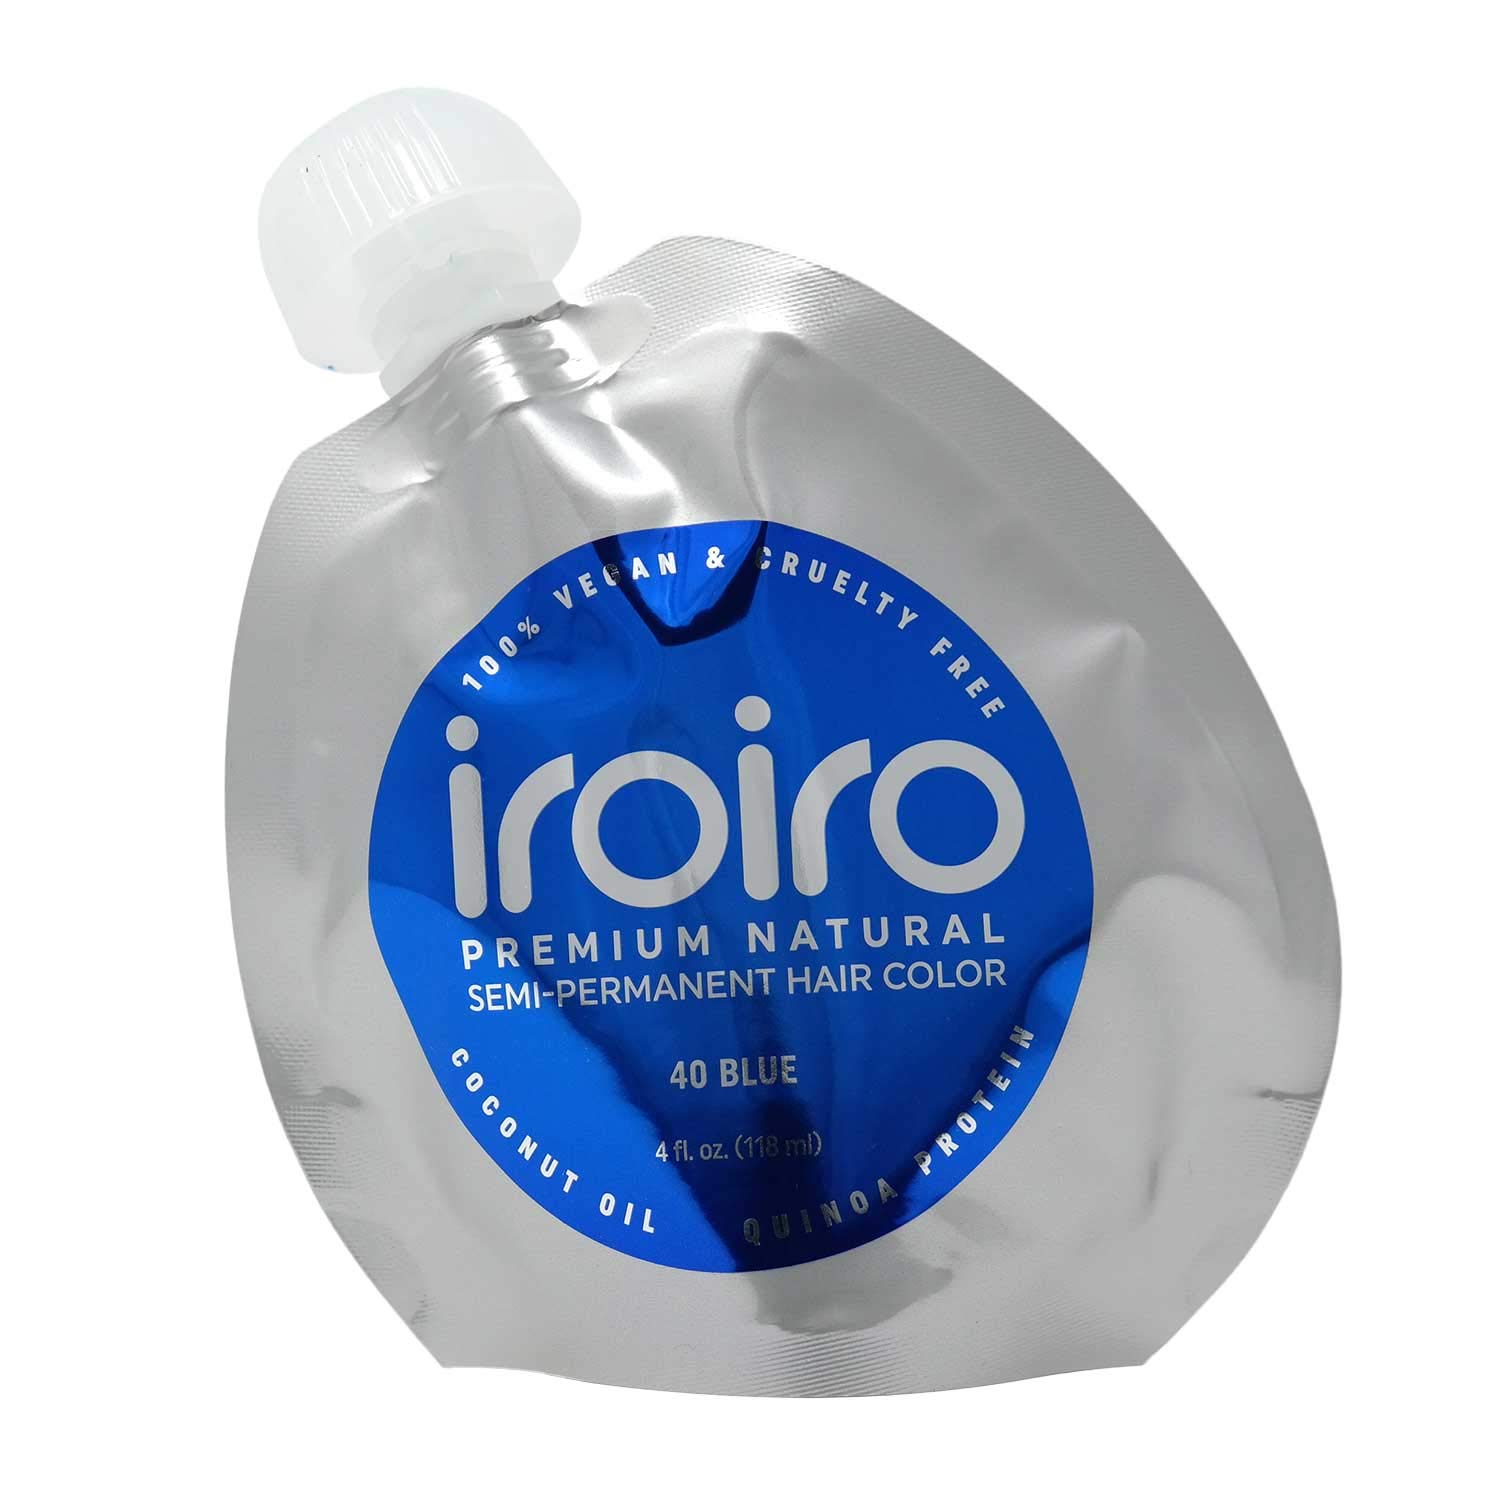 Iroiro Natural Premium Semi-Permanent Hair Color 40 Blue 4oz Blue ...